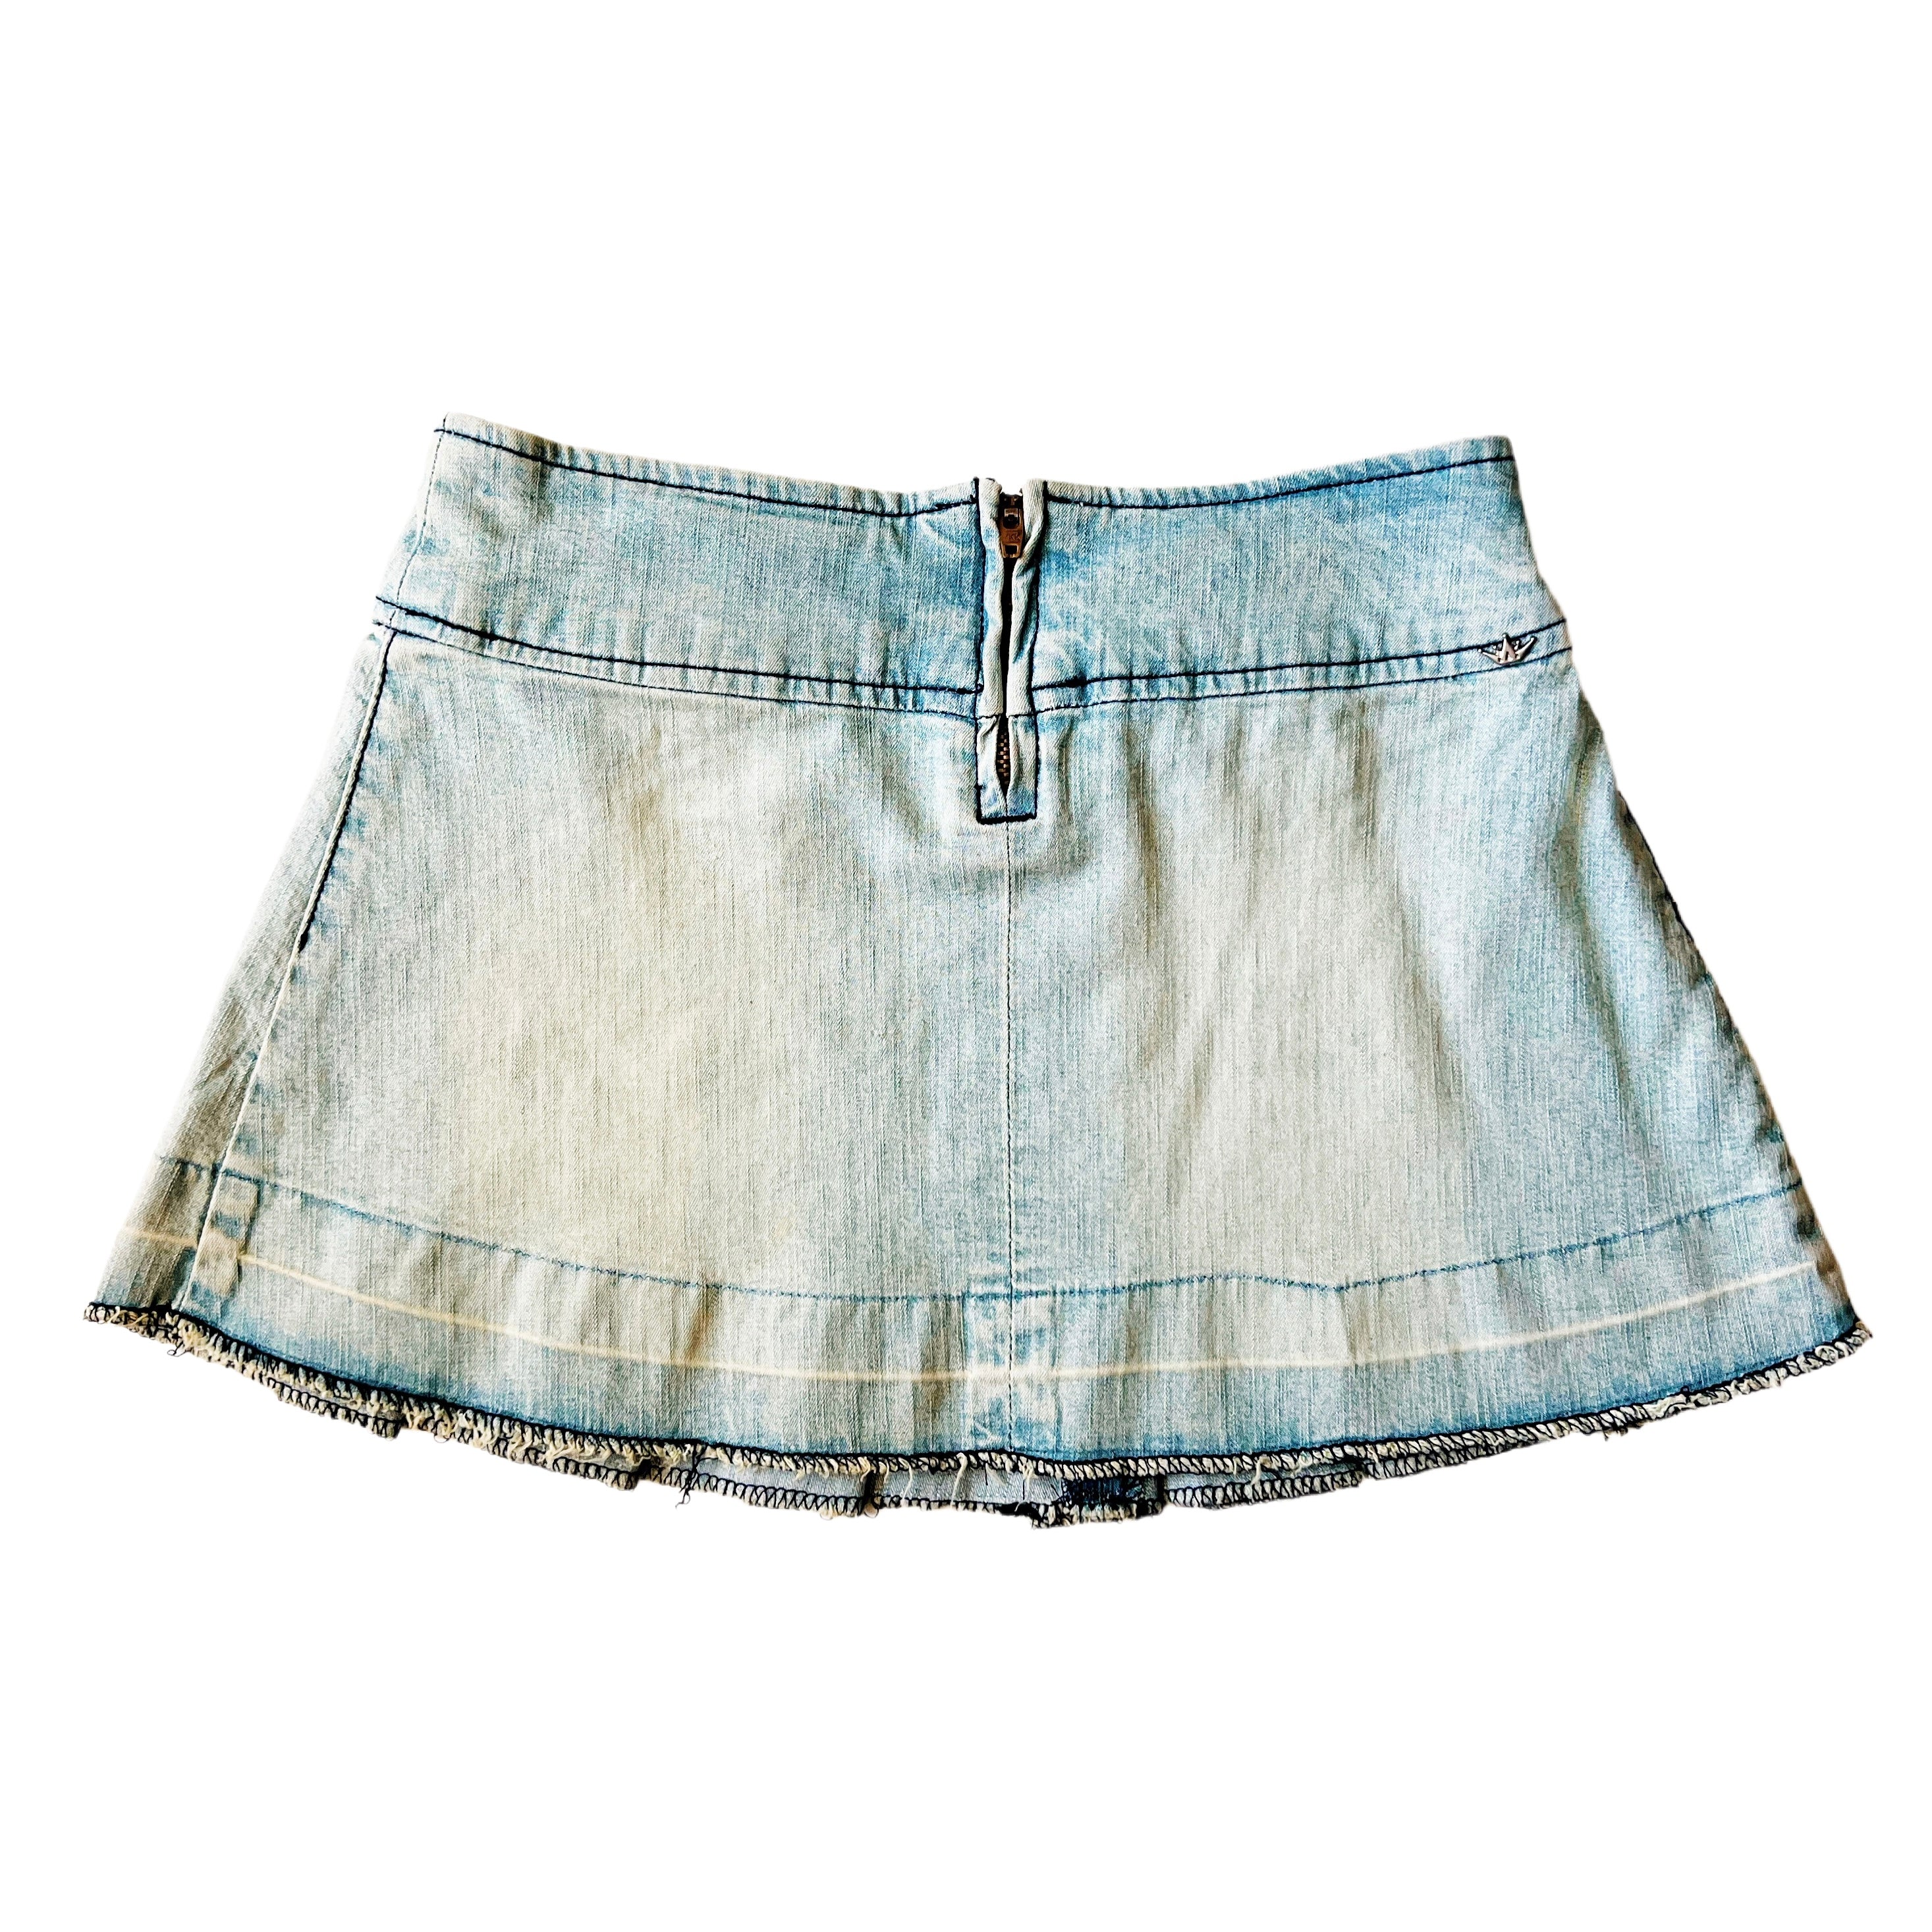 Early 2000s Pleated Denim Mini Skirt (XXS/XS)